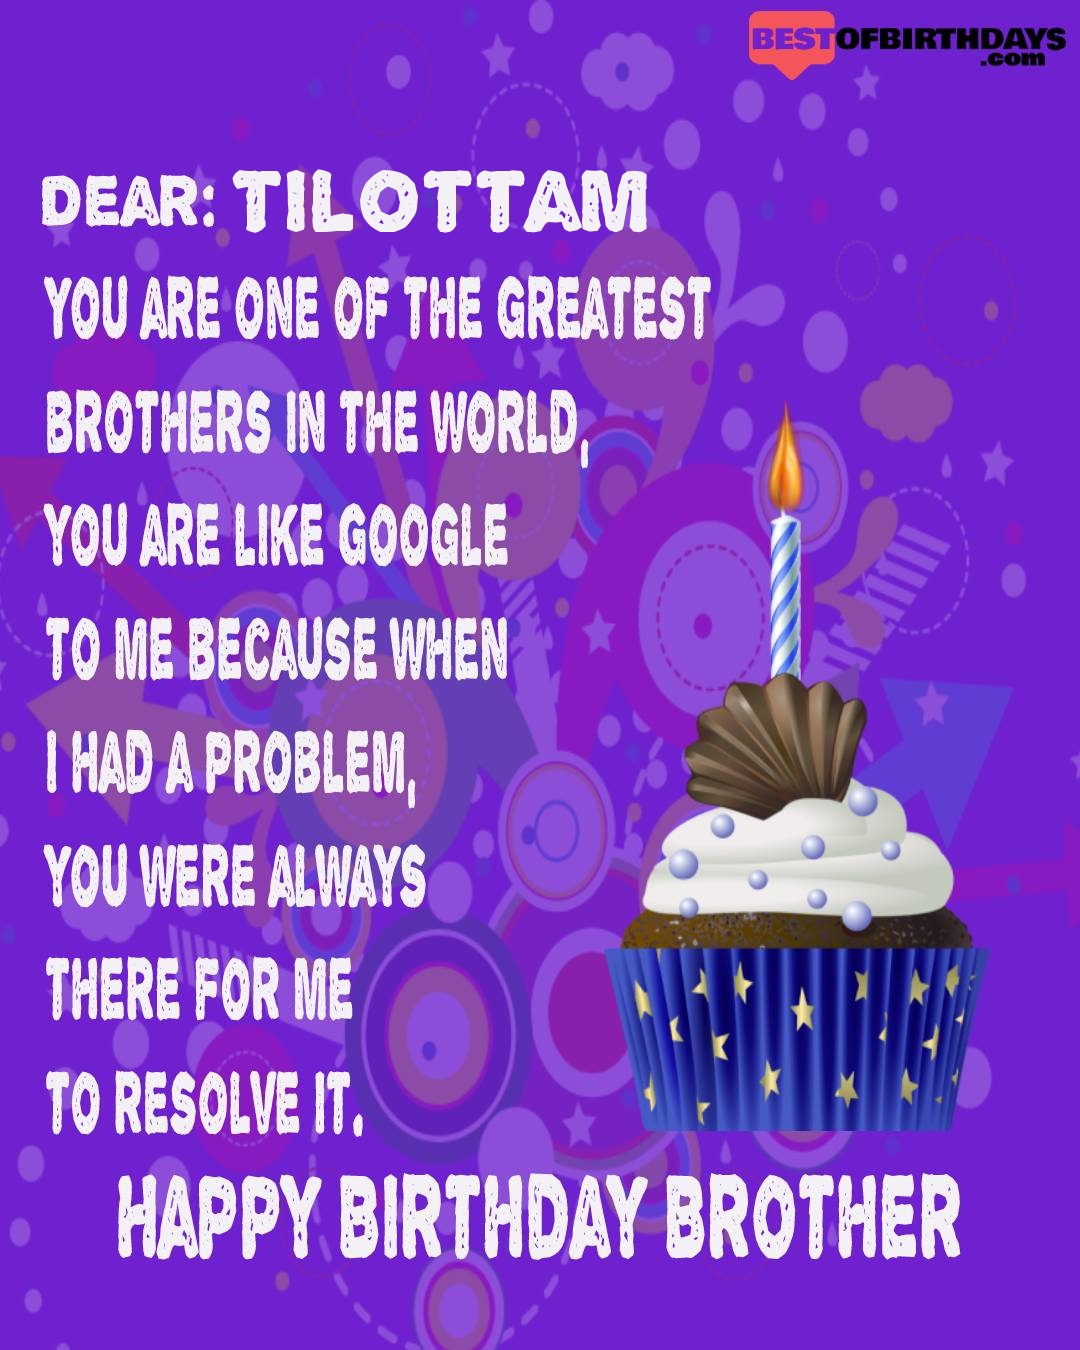 Happy birthday tilottam bhai brother bro